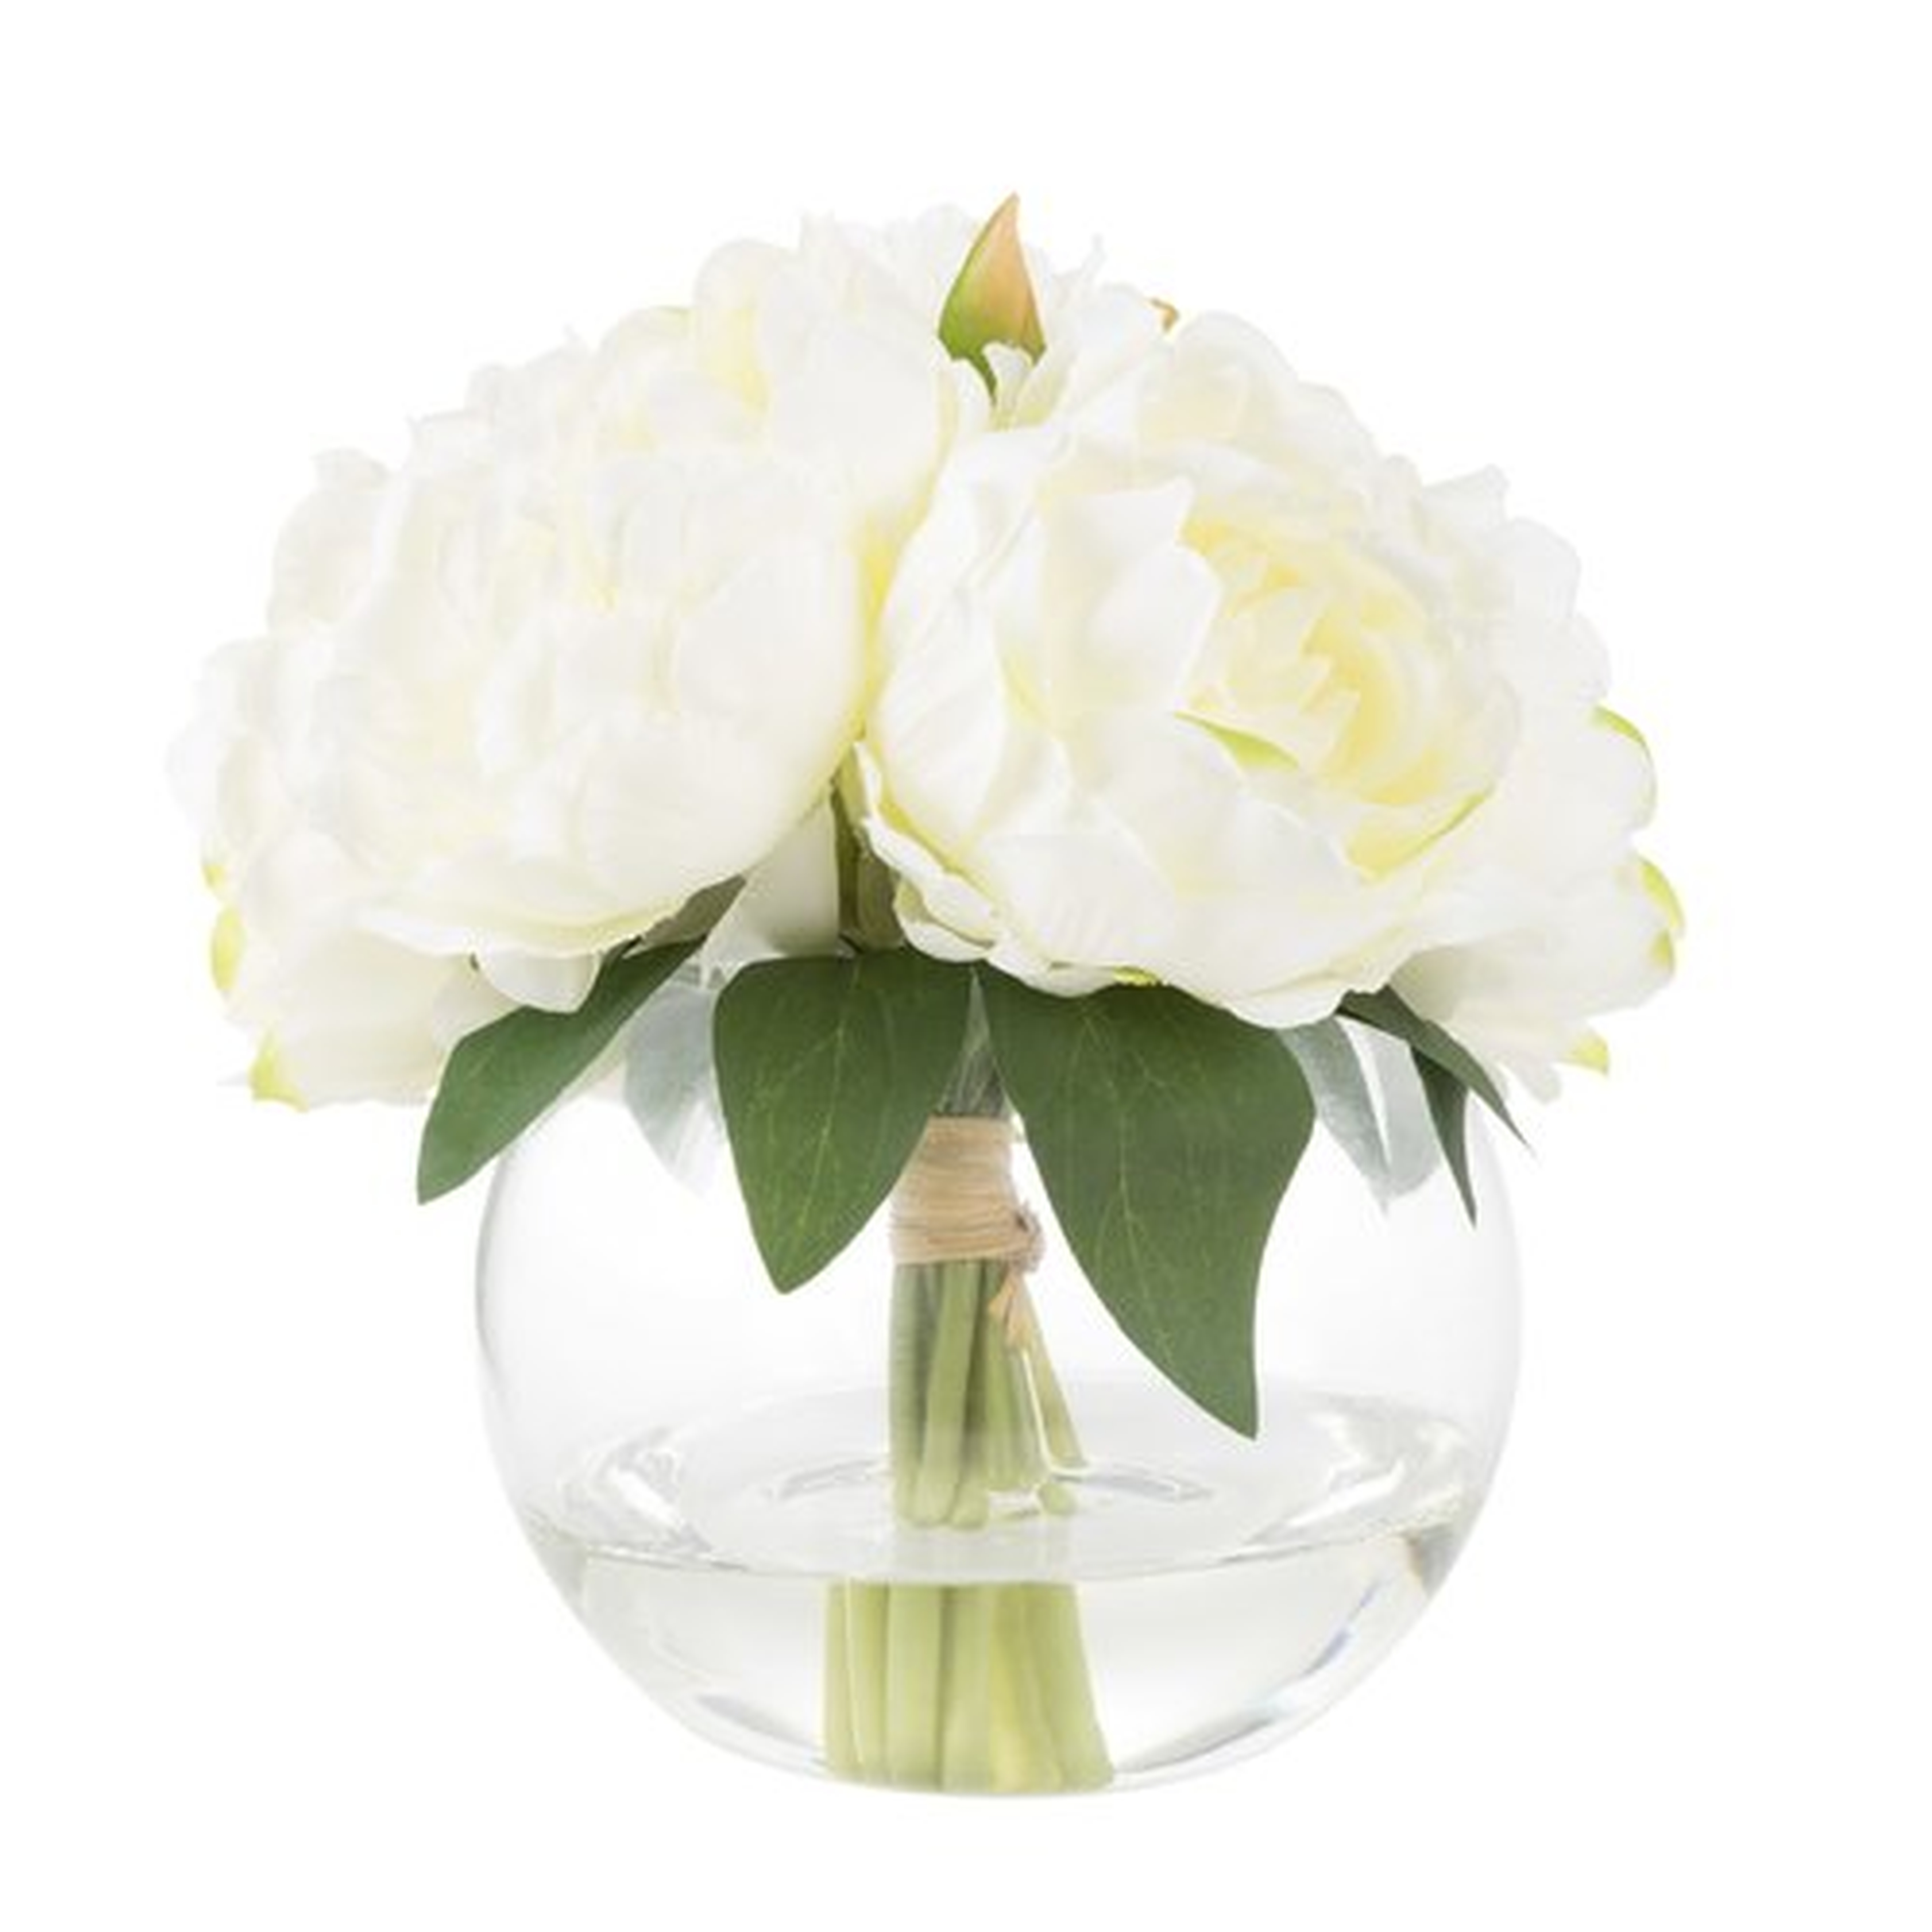 Rose Floral Arrangement and Centerpieces in Glass Vase - Wayfair